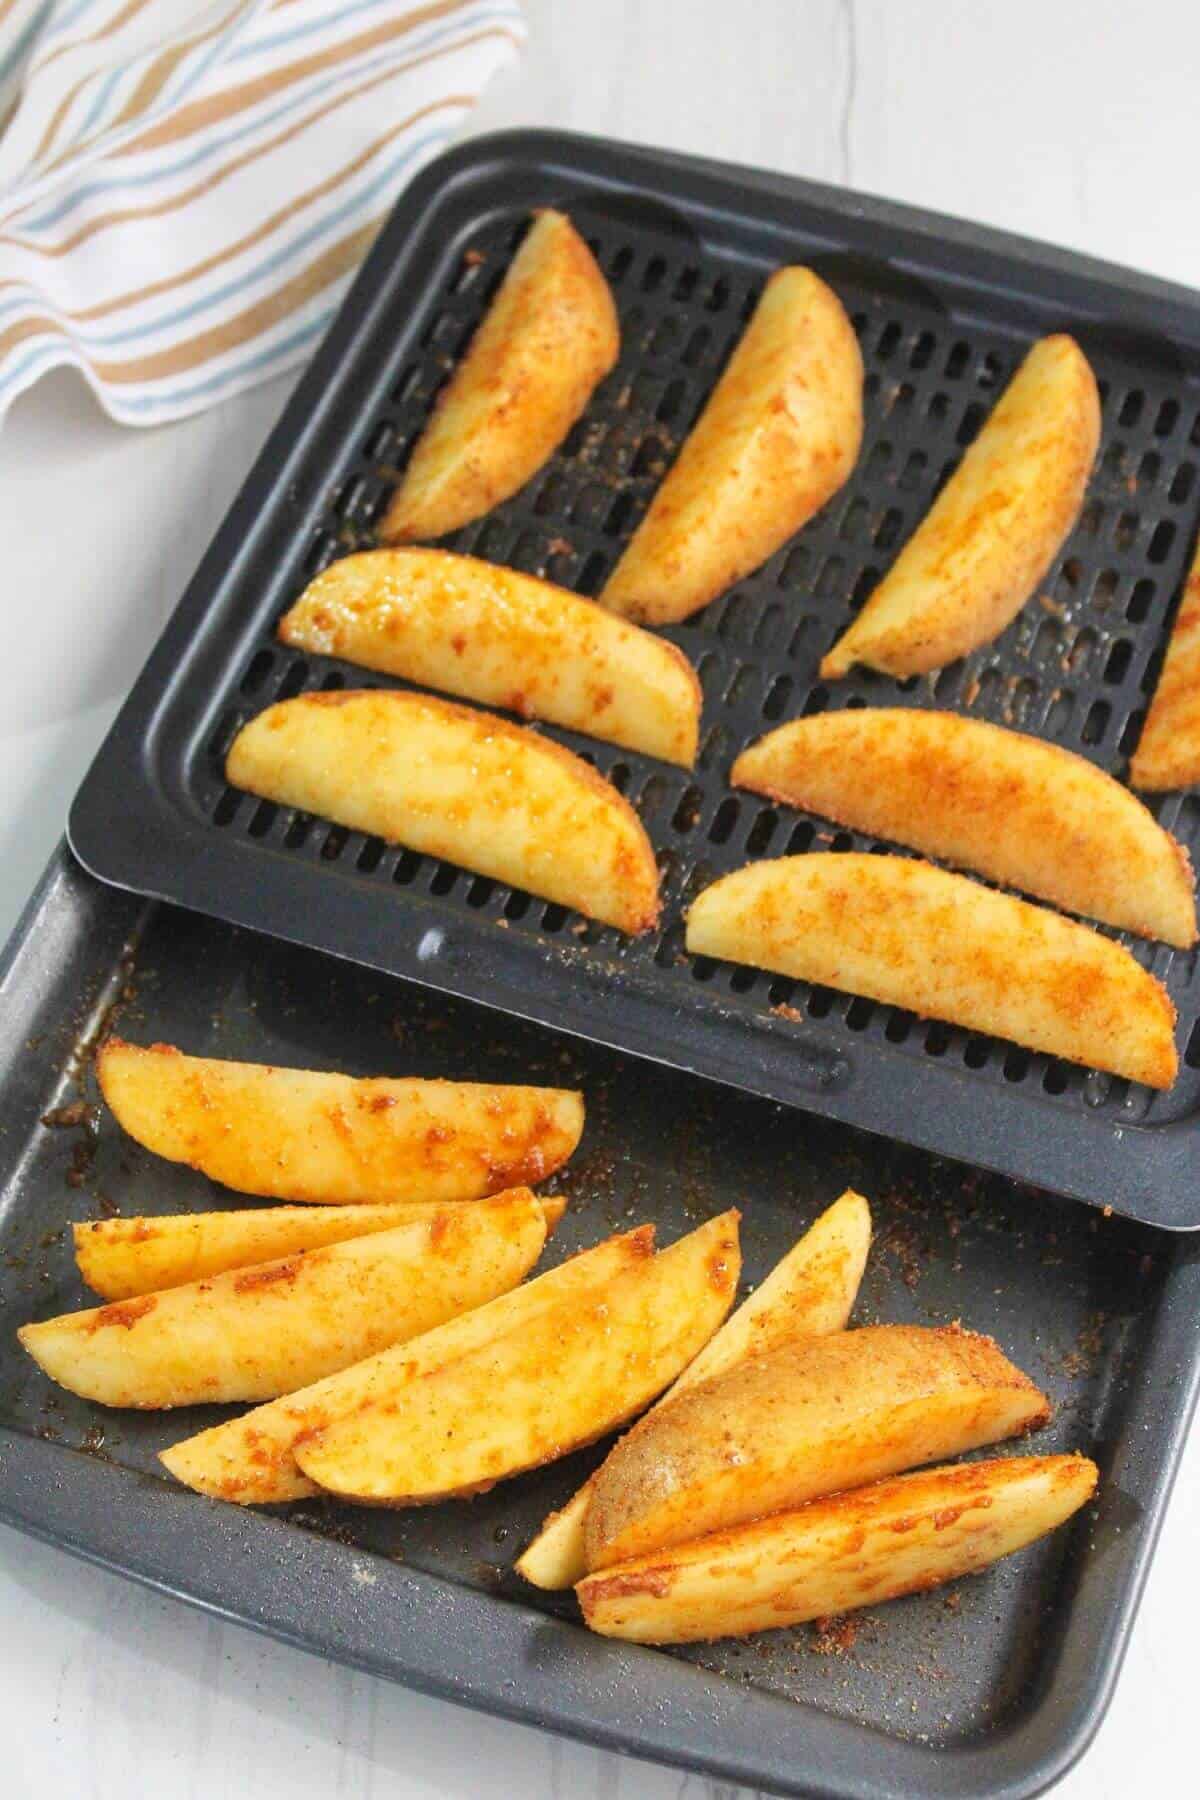 Potato wedges on air fryer trays.